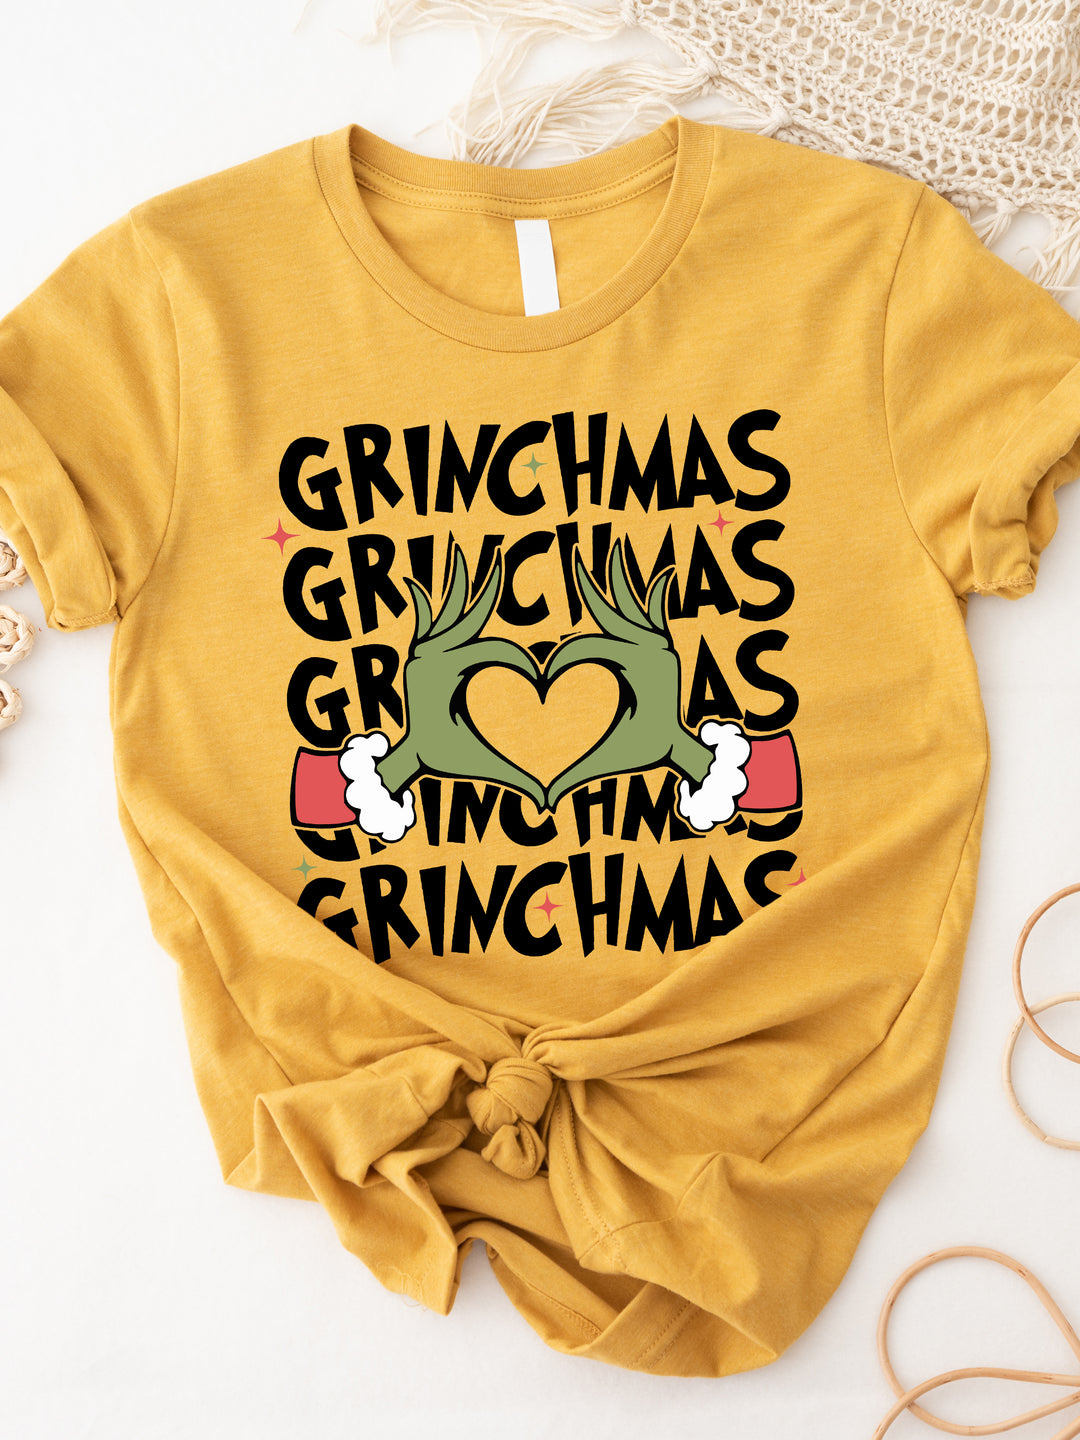 Grinchmas Heart Graphic Tee